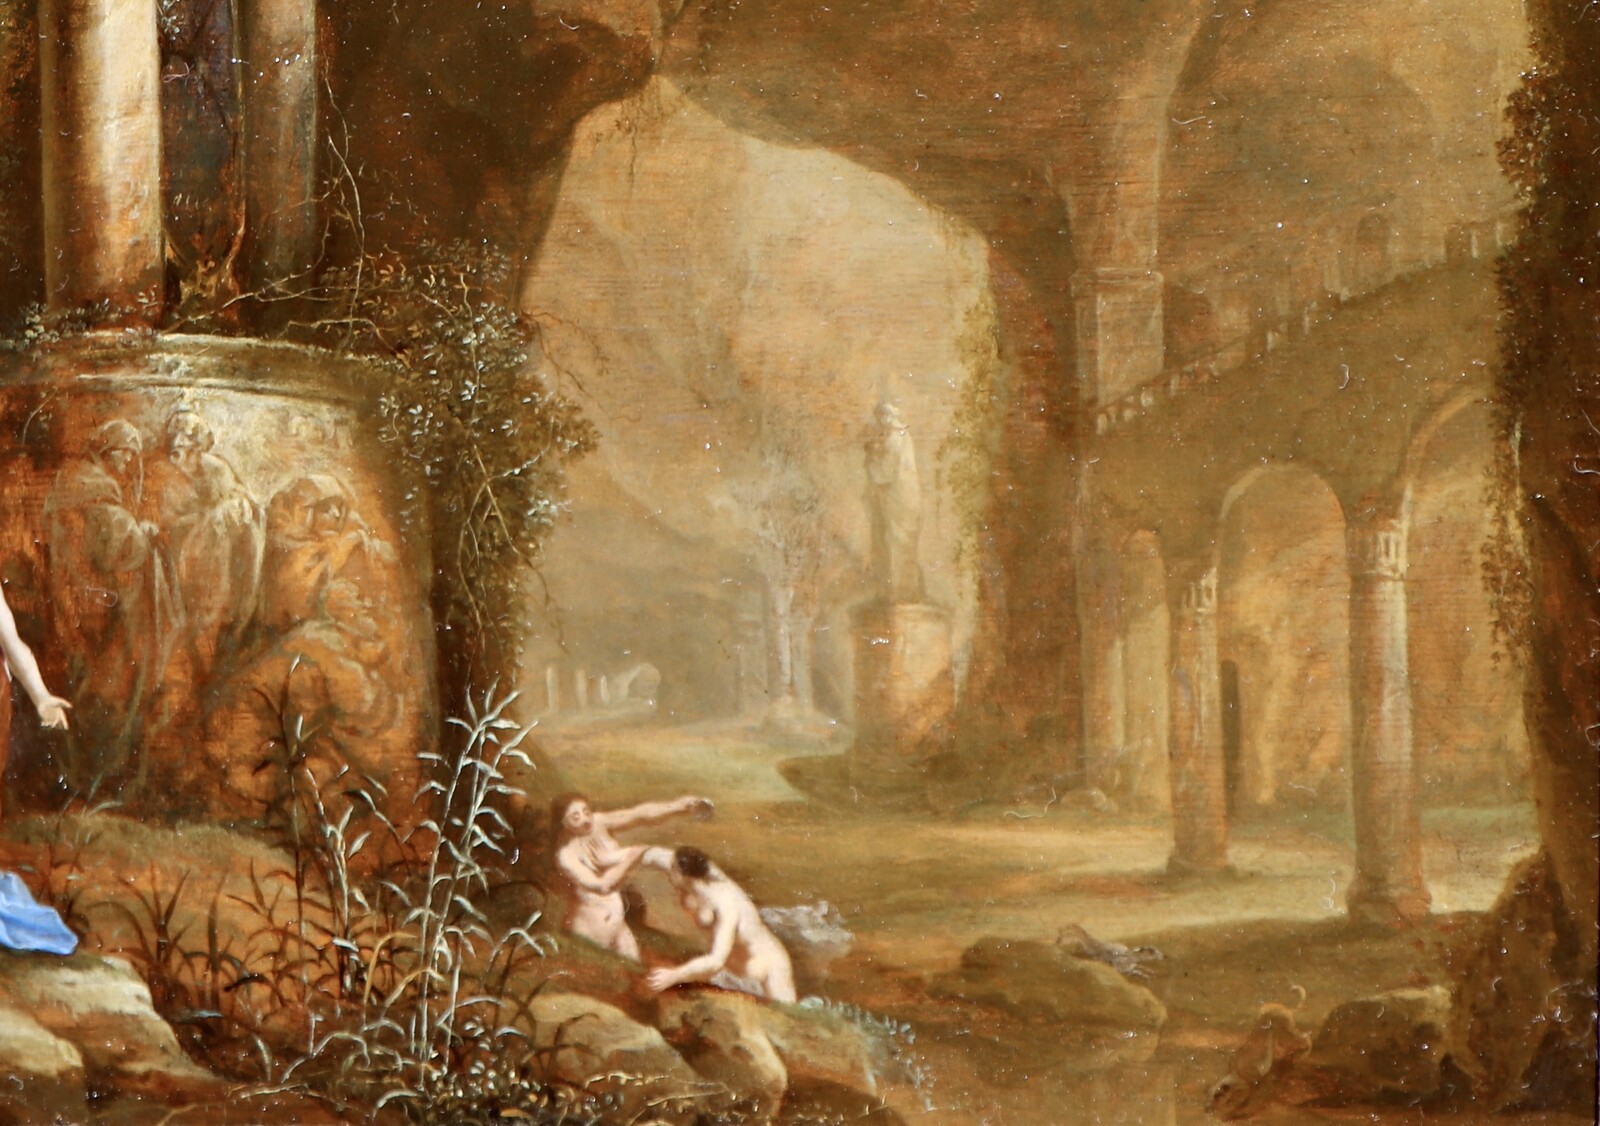 A grotto interior with Diana and Callisto